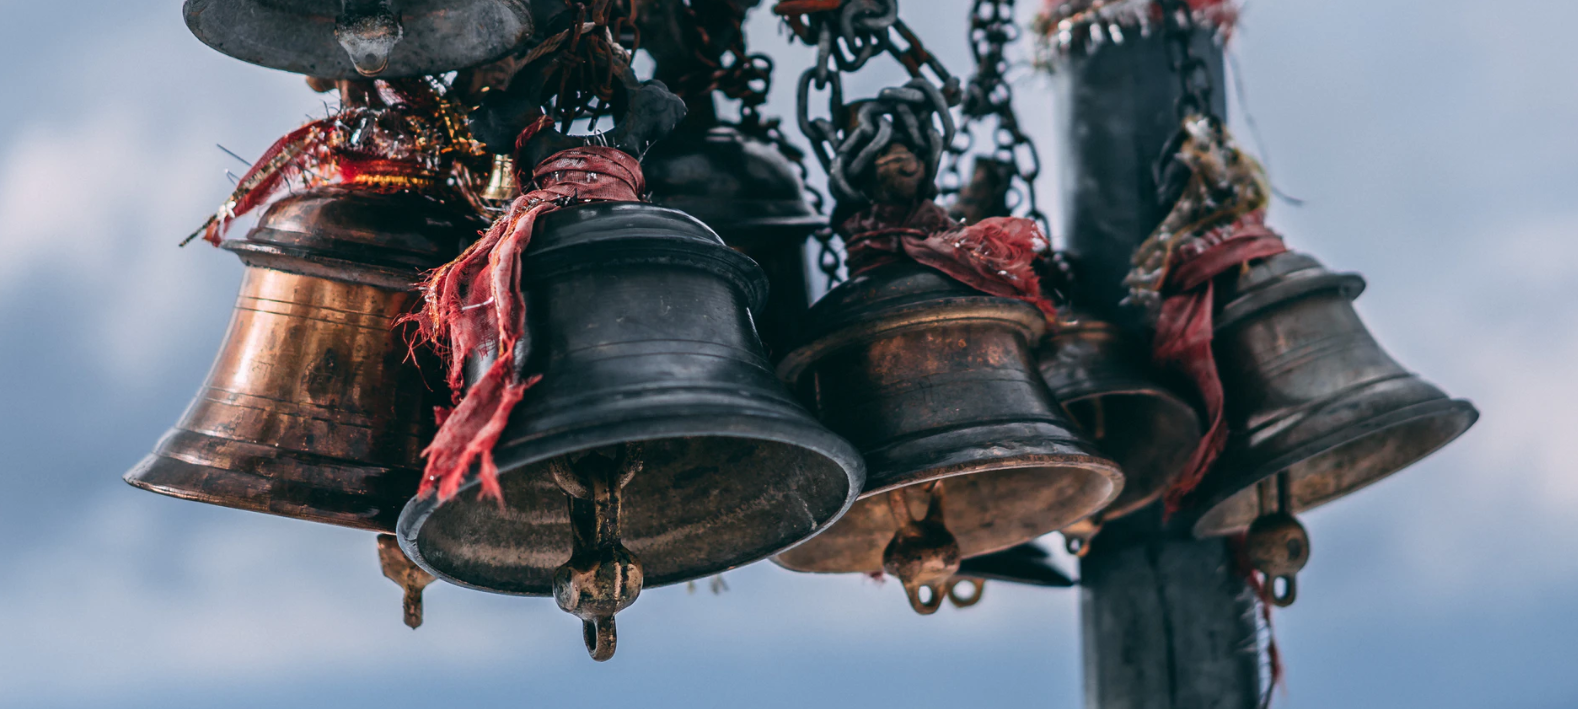 Tintinnabulous: Pertaining to Bell Ringing